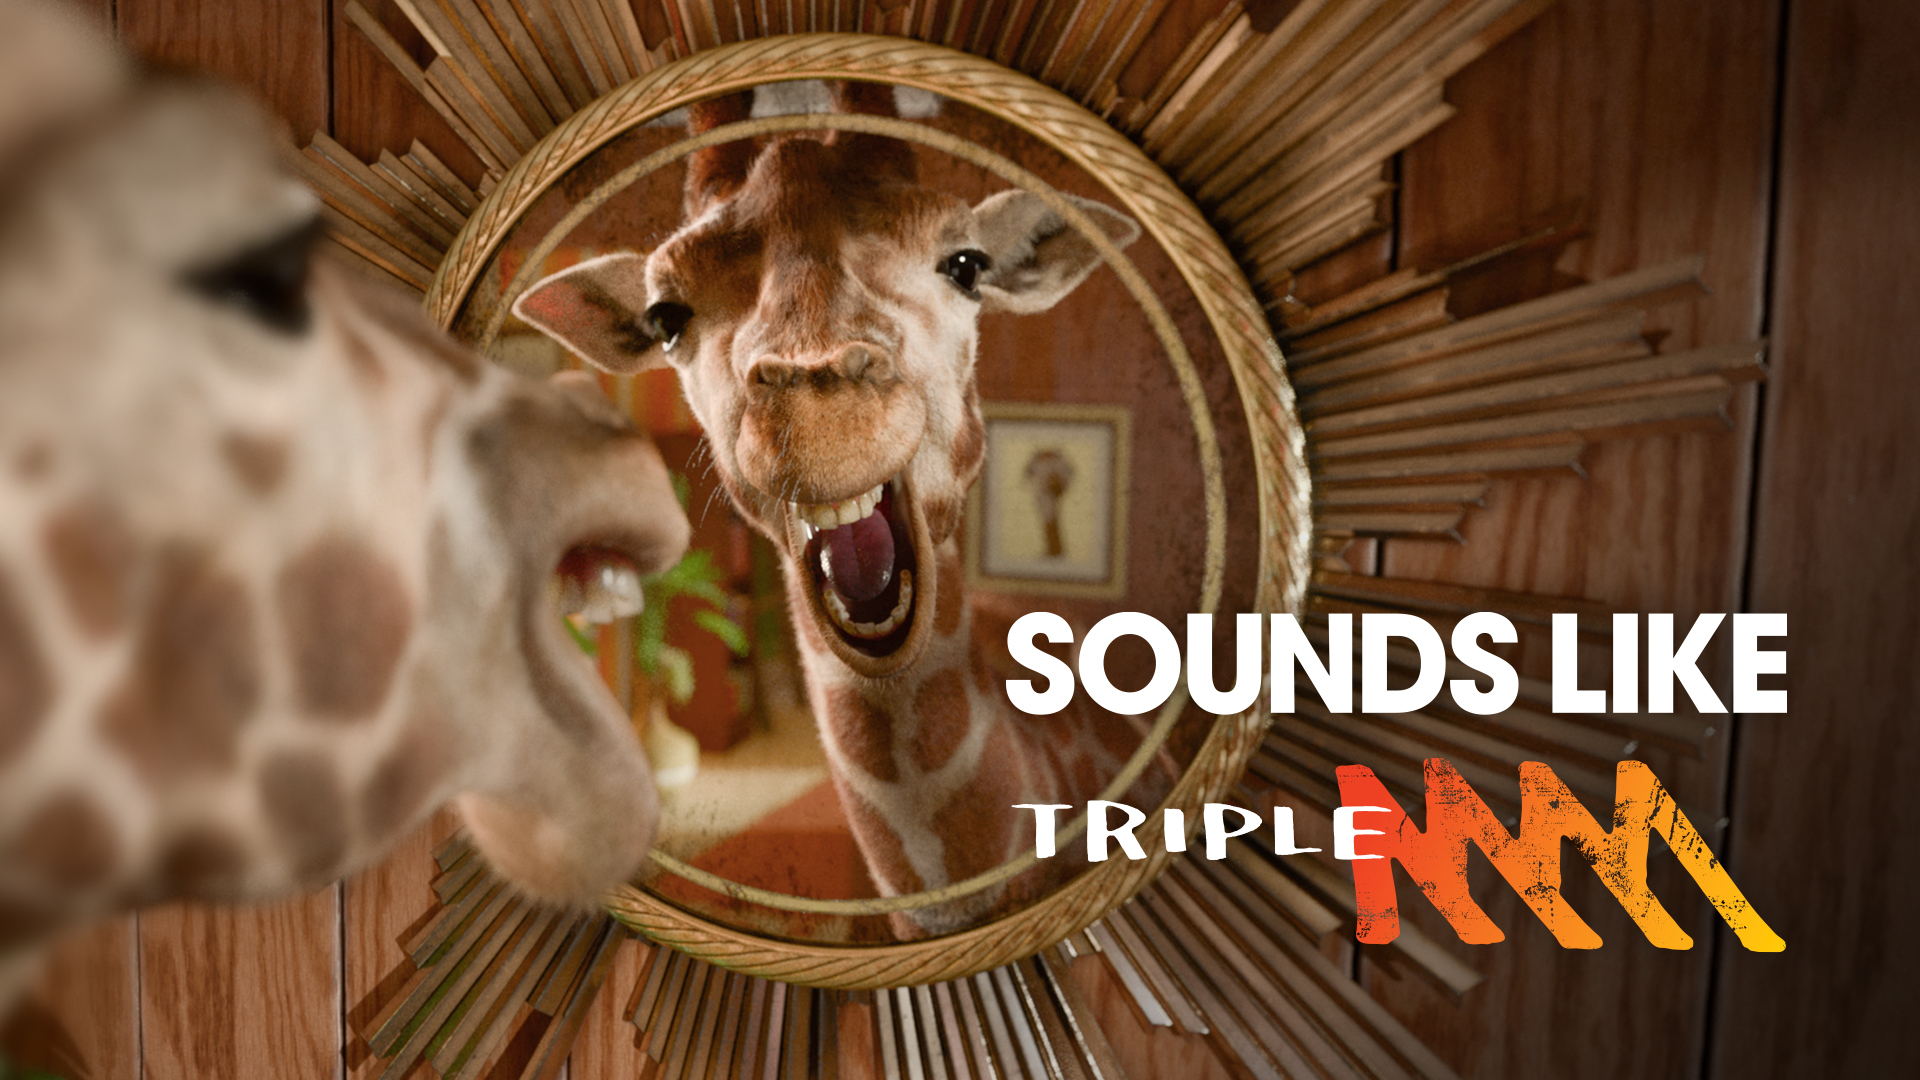 Triple M launches 'Sounds Like Triple M' marketing campaign